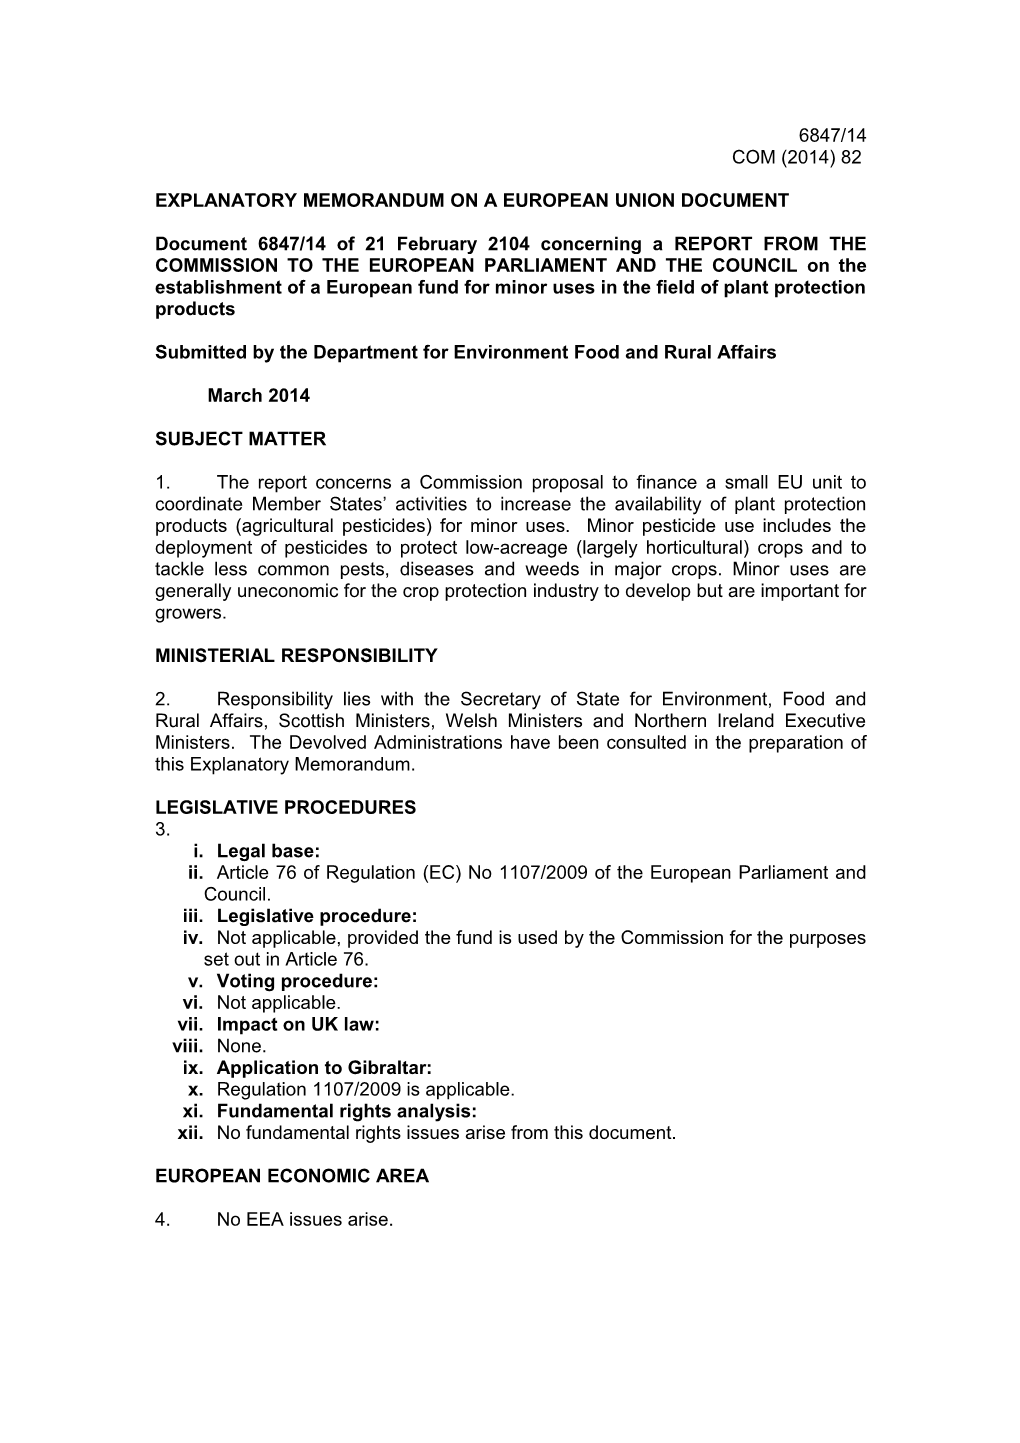 Explanatory Memorandum on a European Union Document